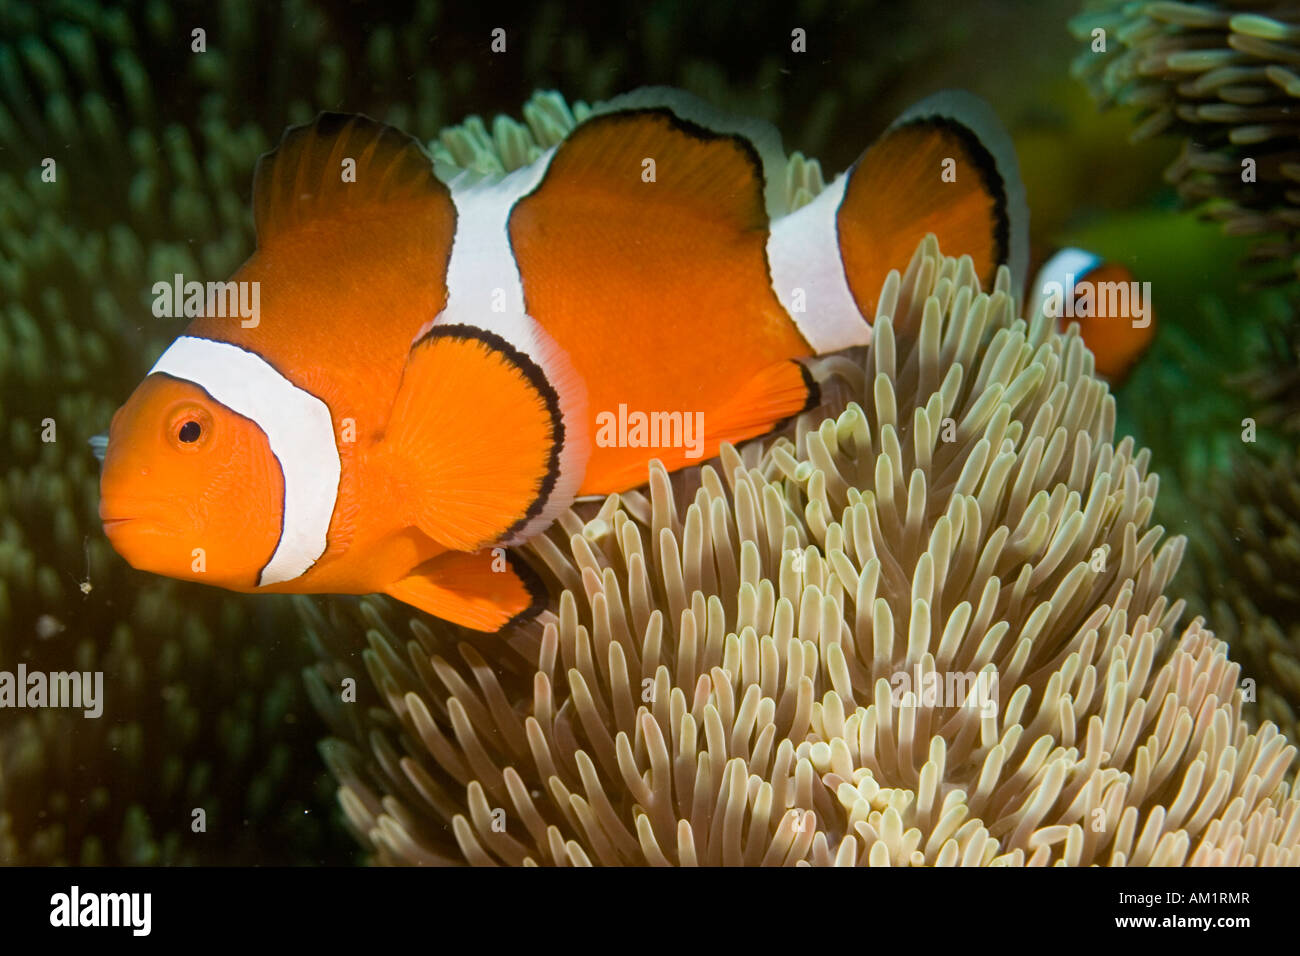 False anemonefish or Clownfish Amphiprion ocellaris. Stock Photo